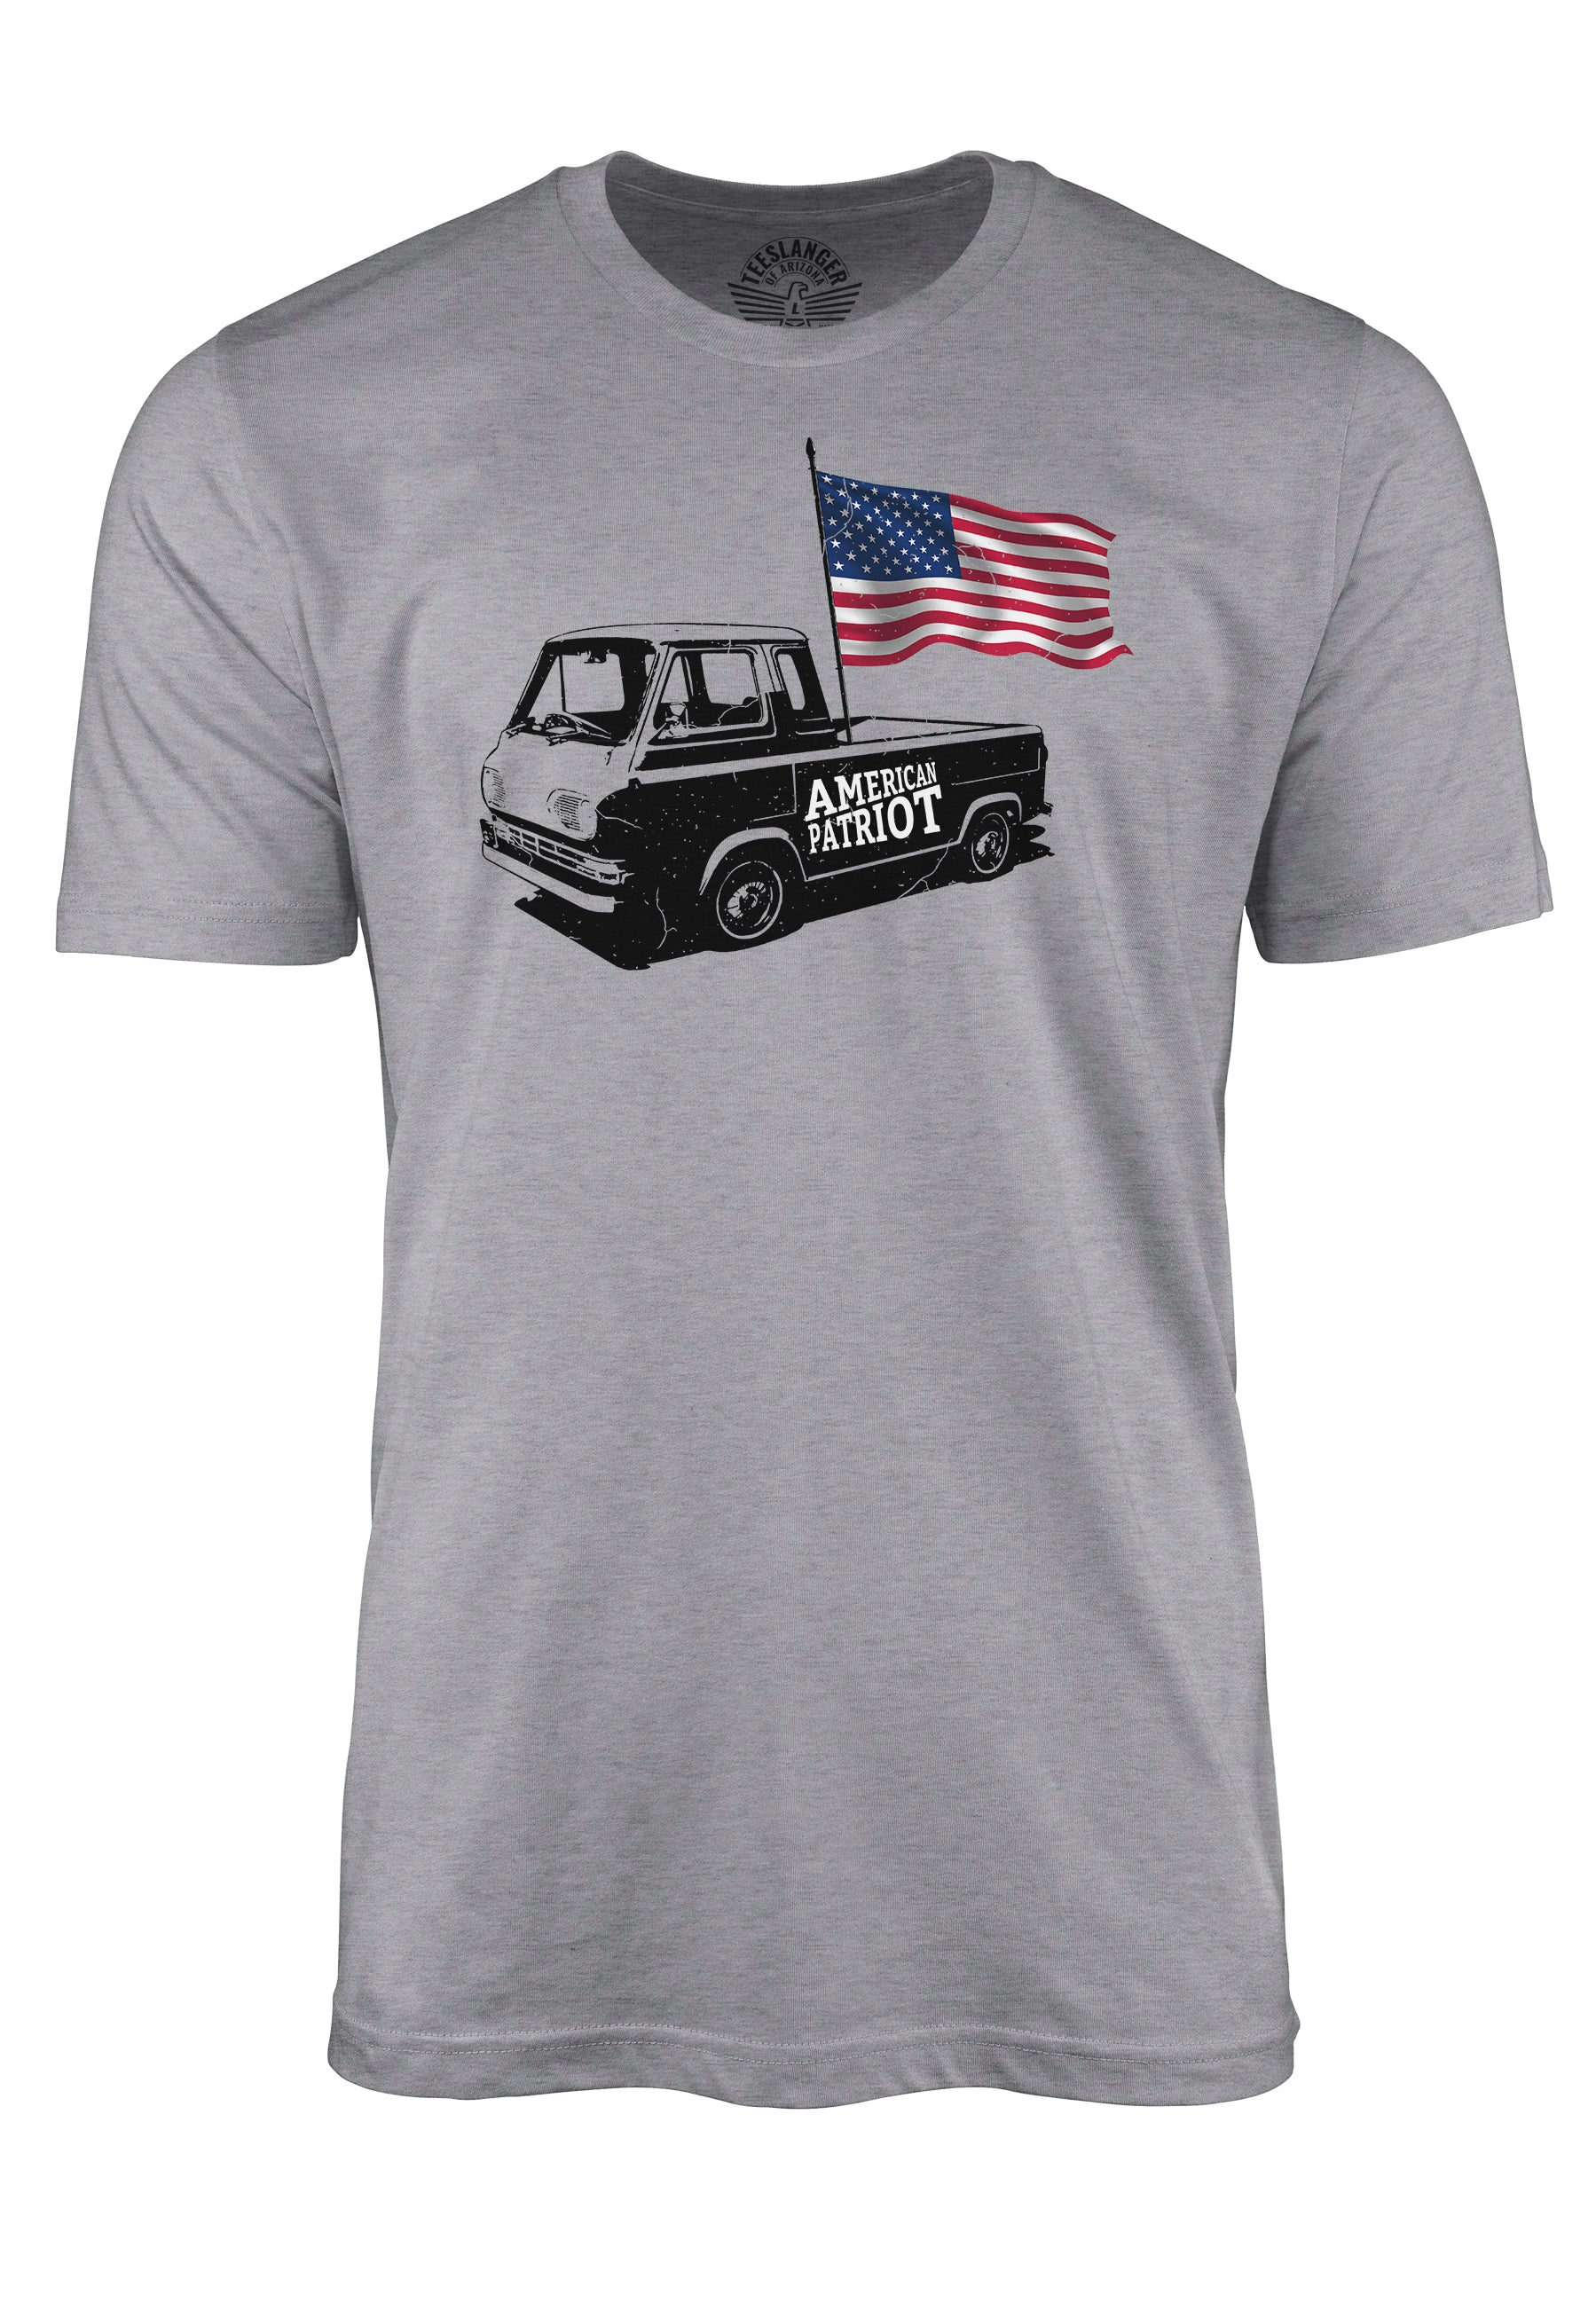 Truck Flag Patriot Tee Shirt